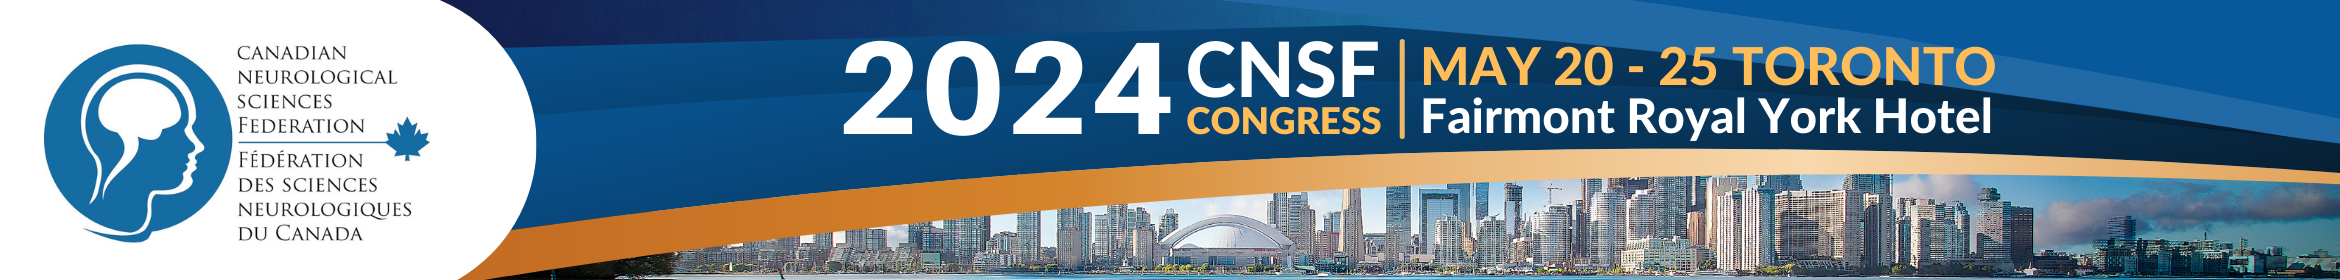 2024 CNSF Congress Main banner